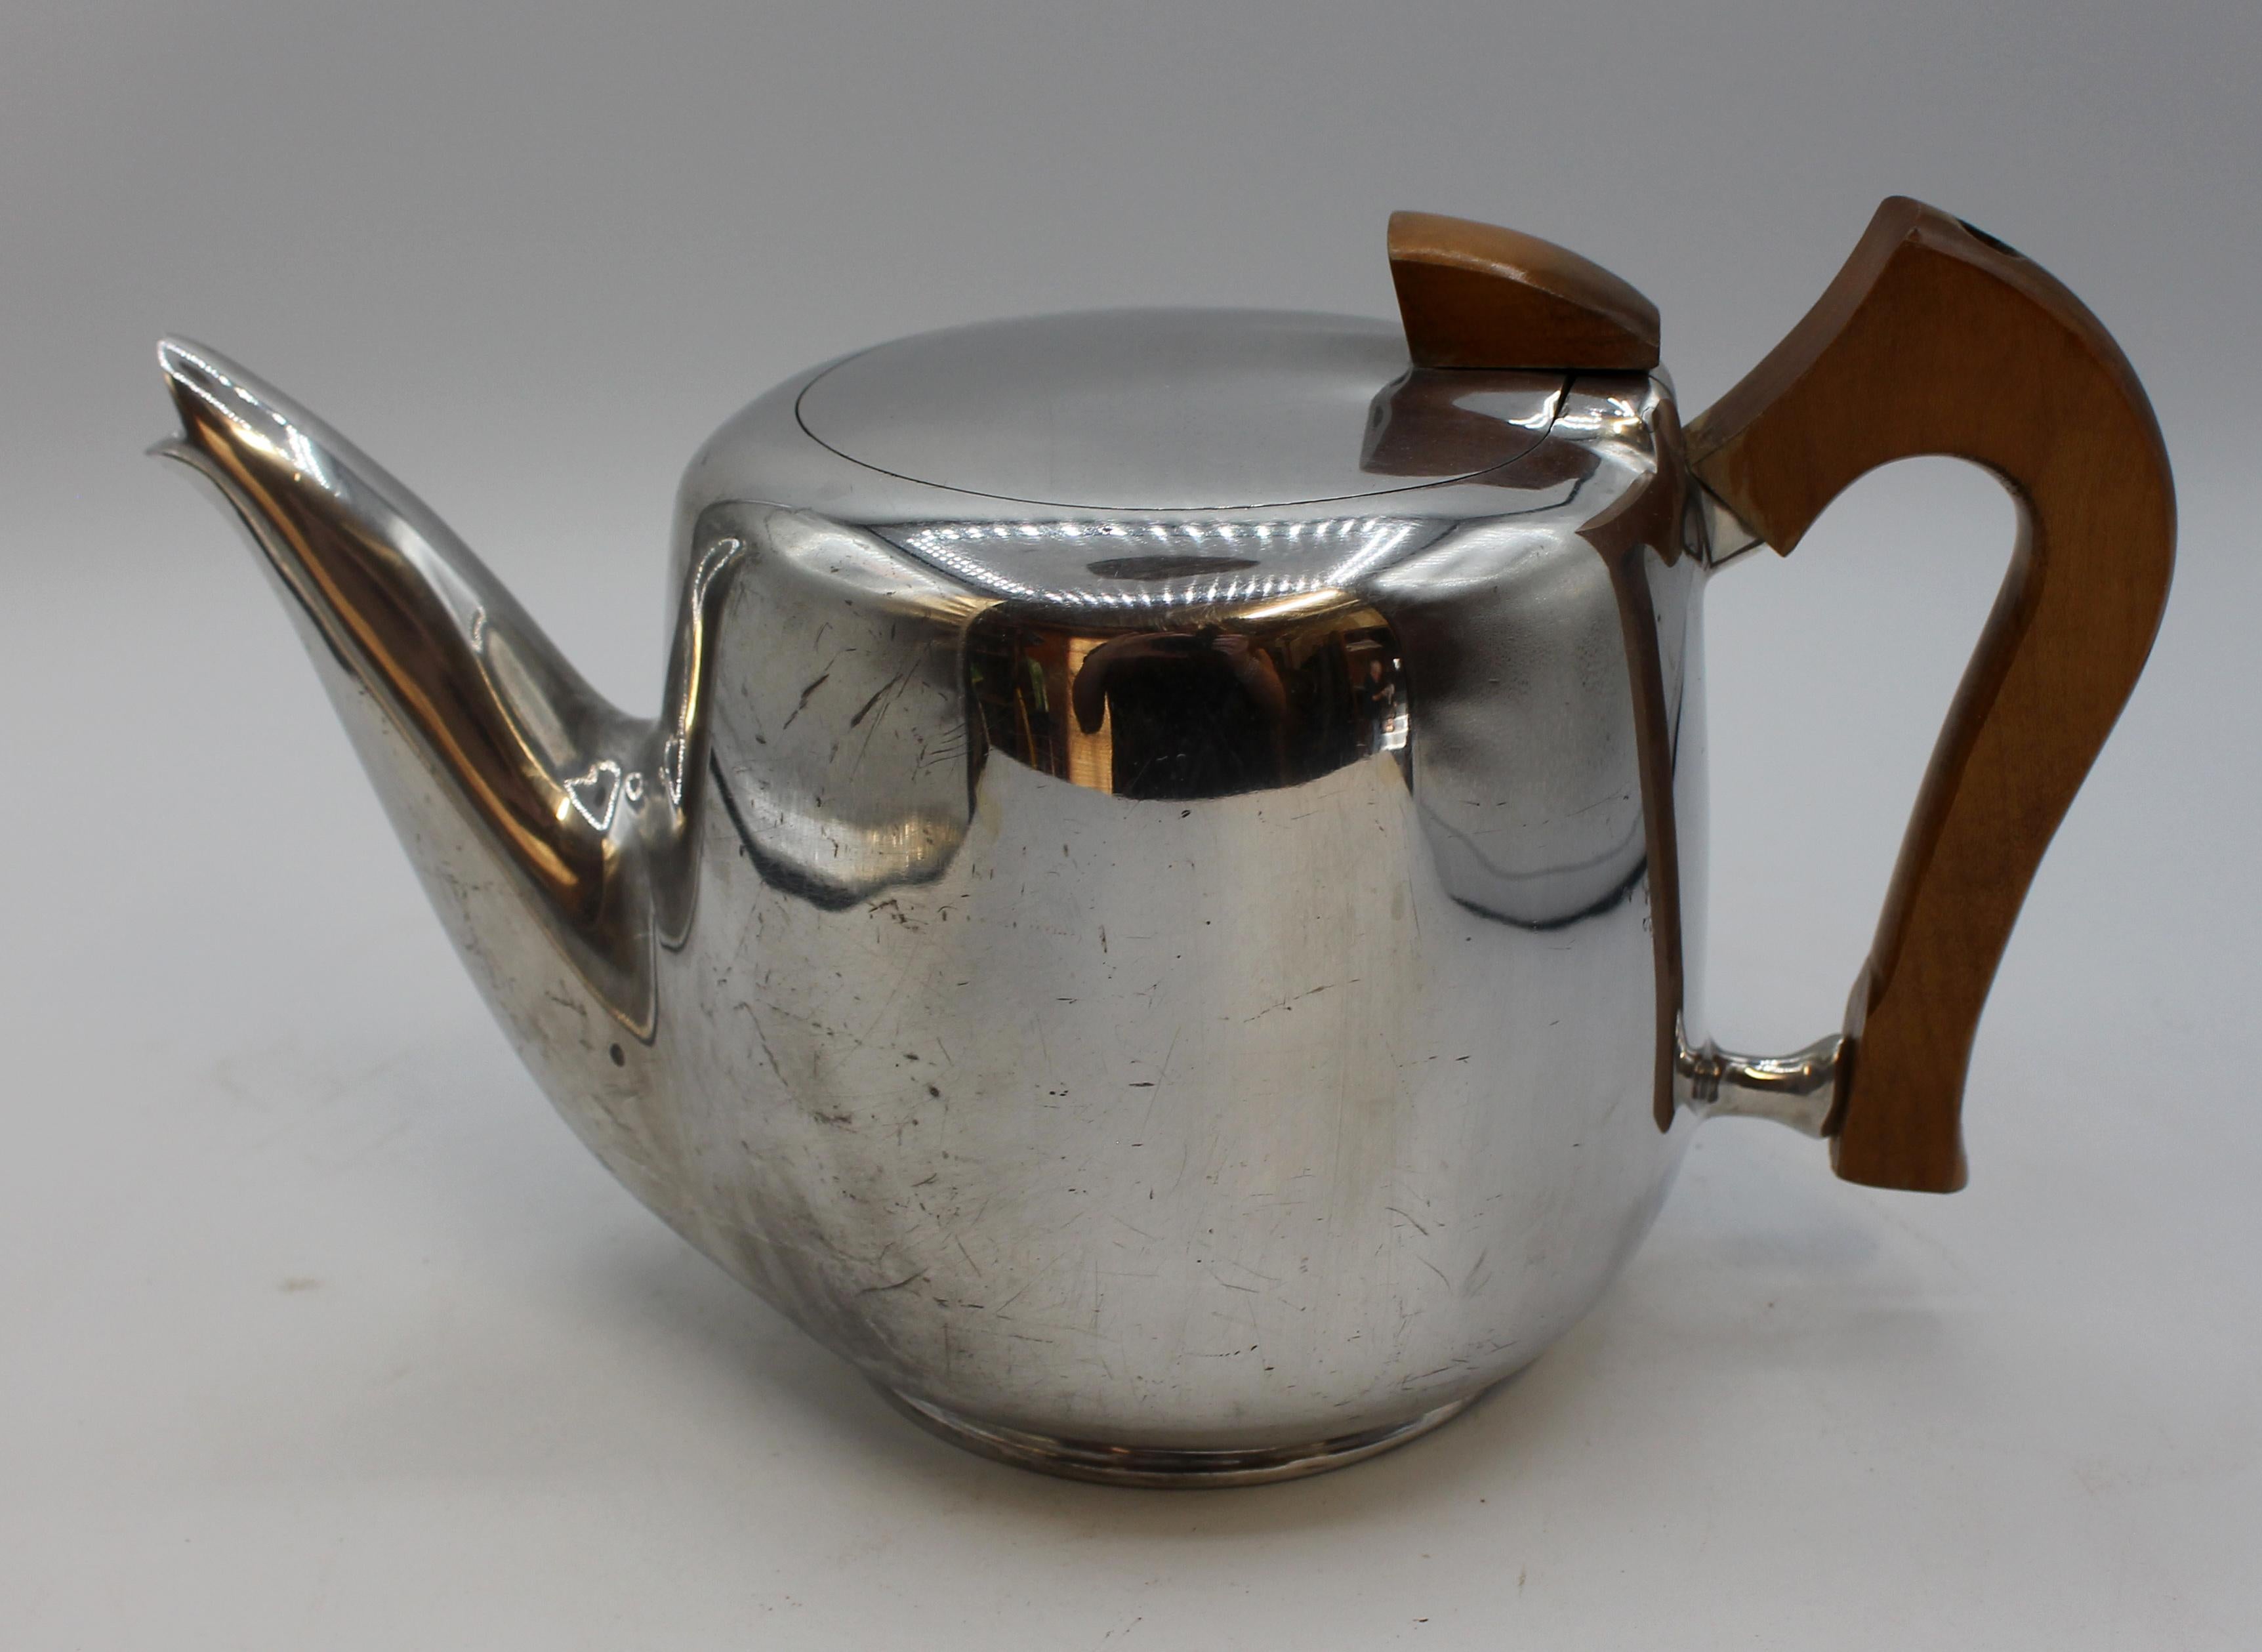 20th Century 1950s-60s Picquot Ware Tea & Coffee Set